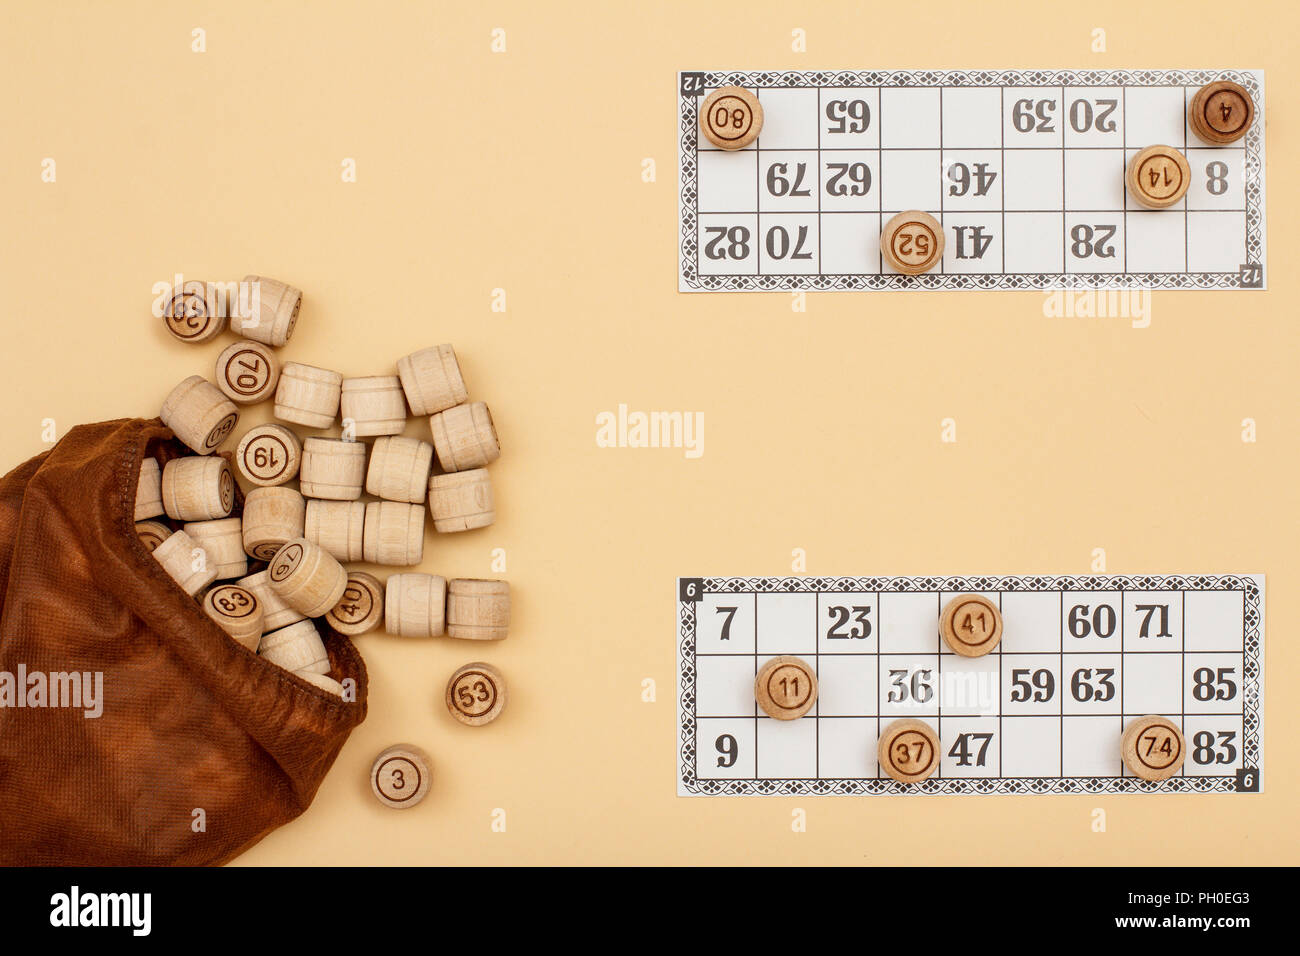 Loto - Russian lotto bingo gam - Apps on Google Play